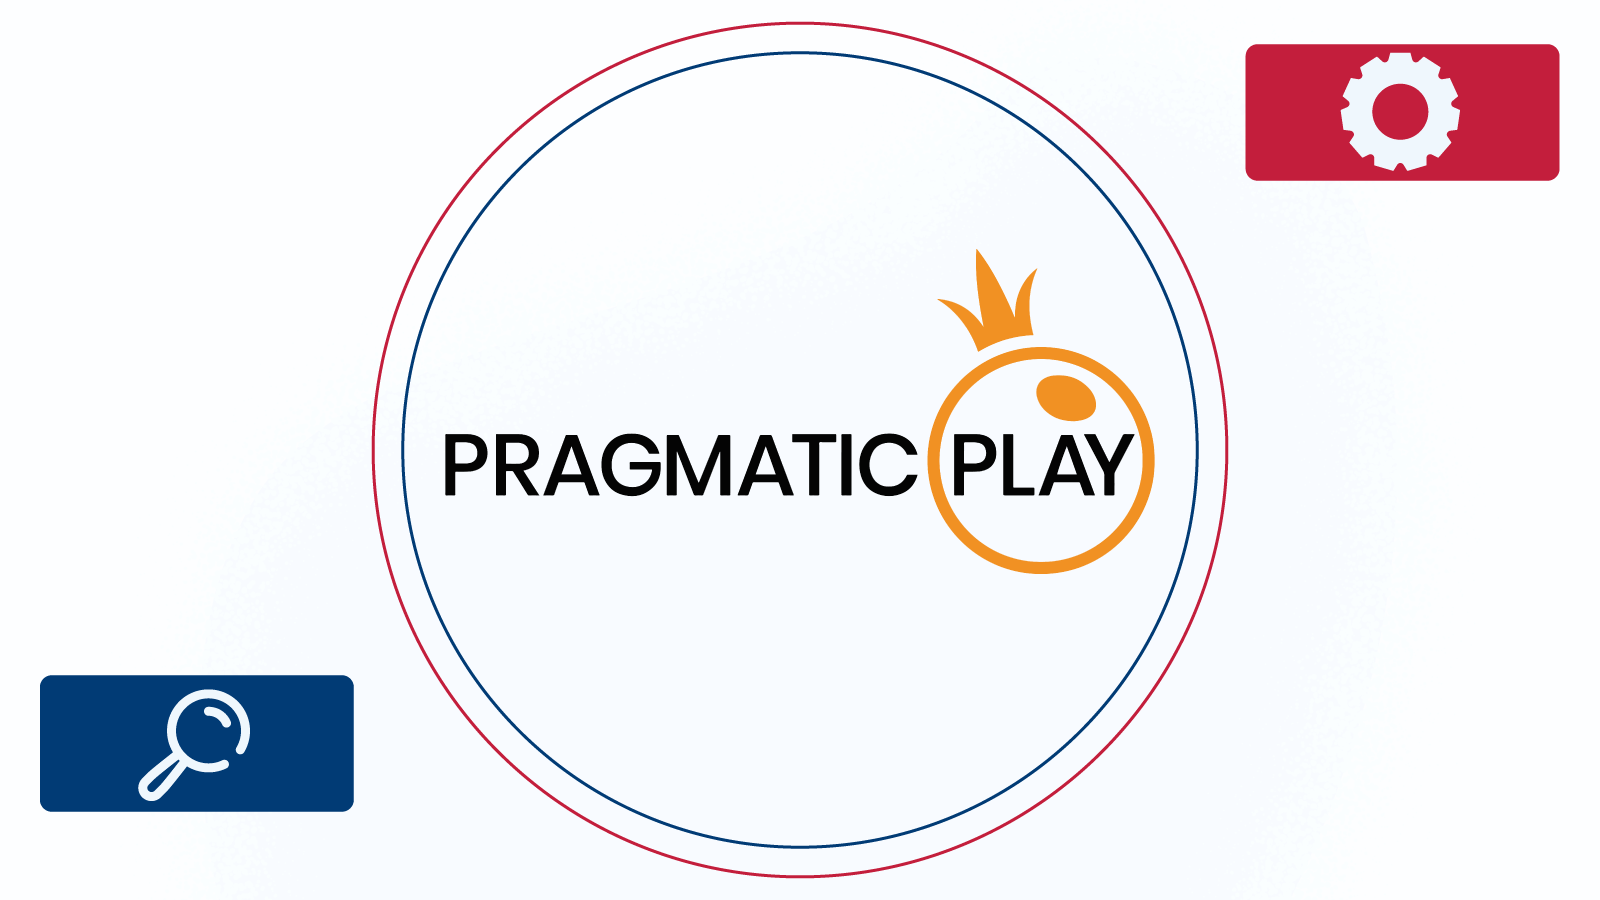 D’autres particularités importantes de Pragmatic Play